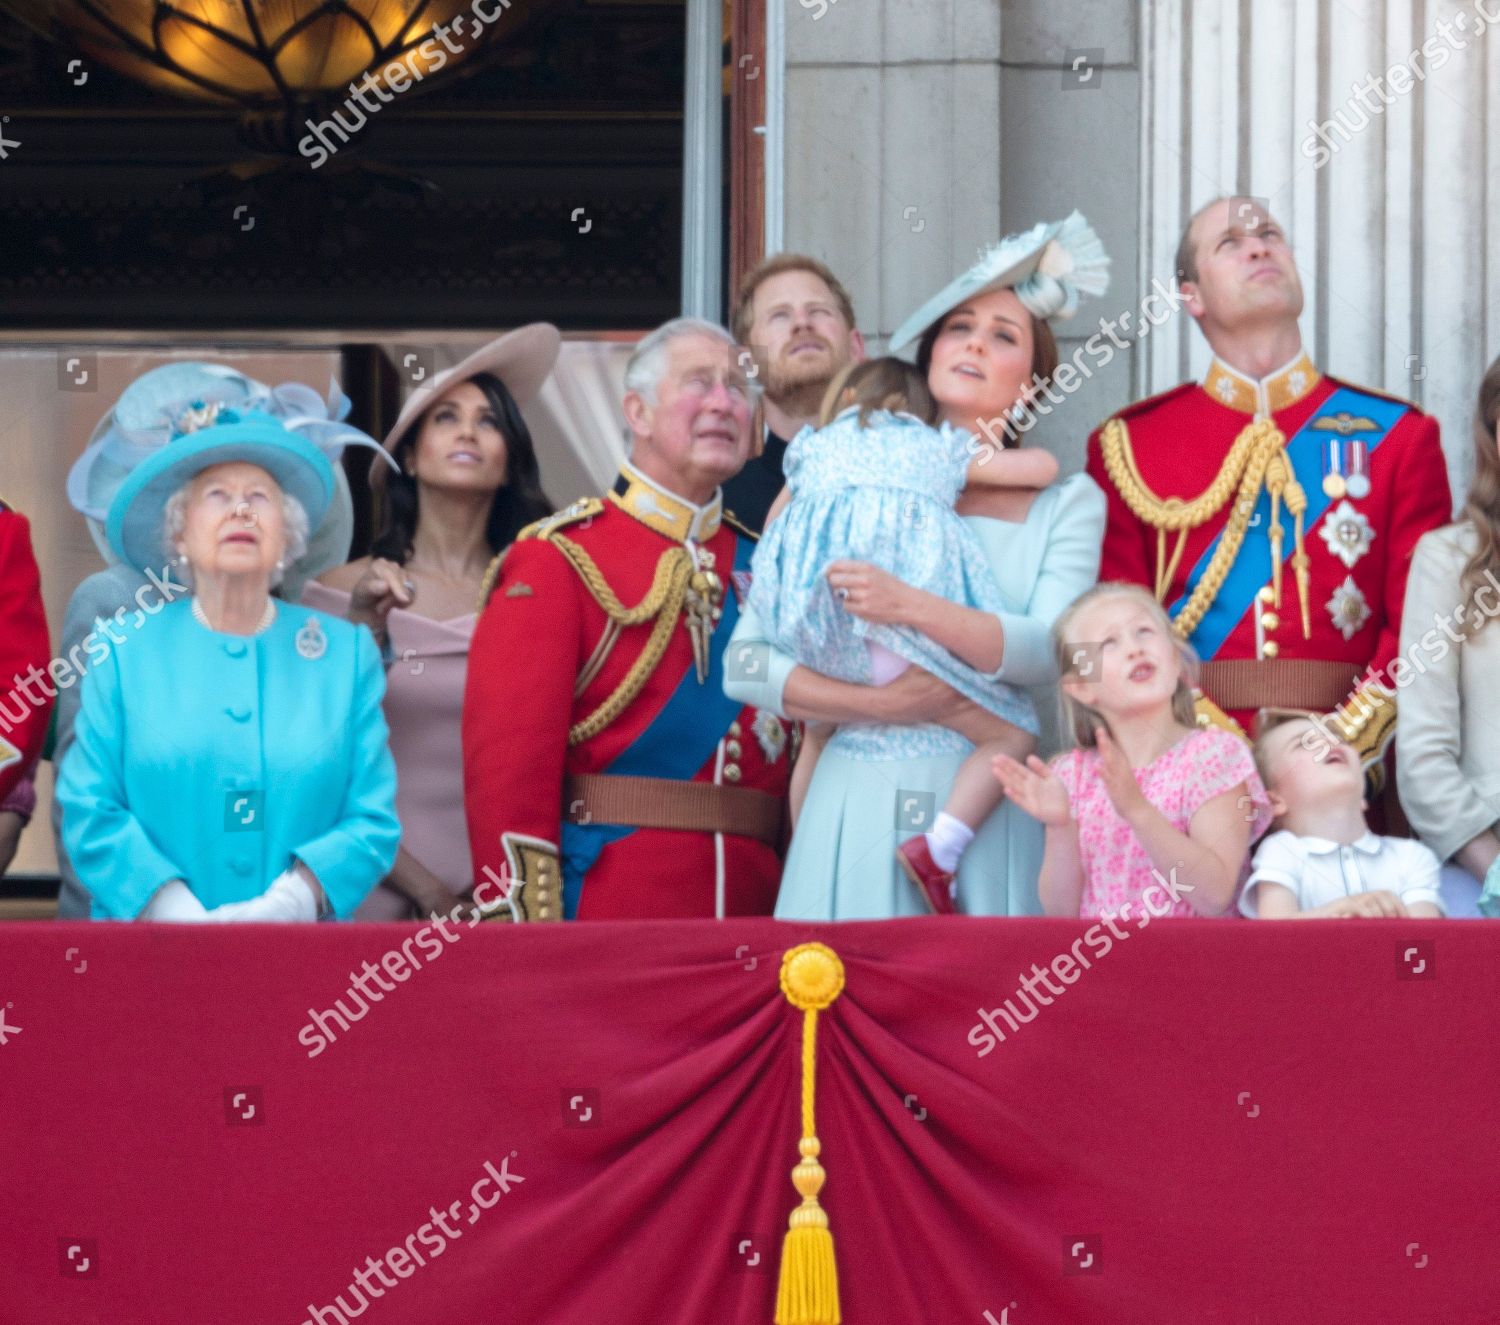 trooping-the-colour-ceremony-london-uk-9708406bp-1500.jpg